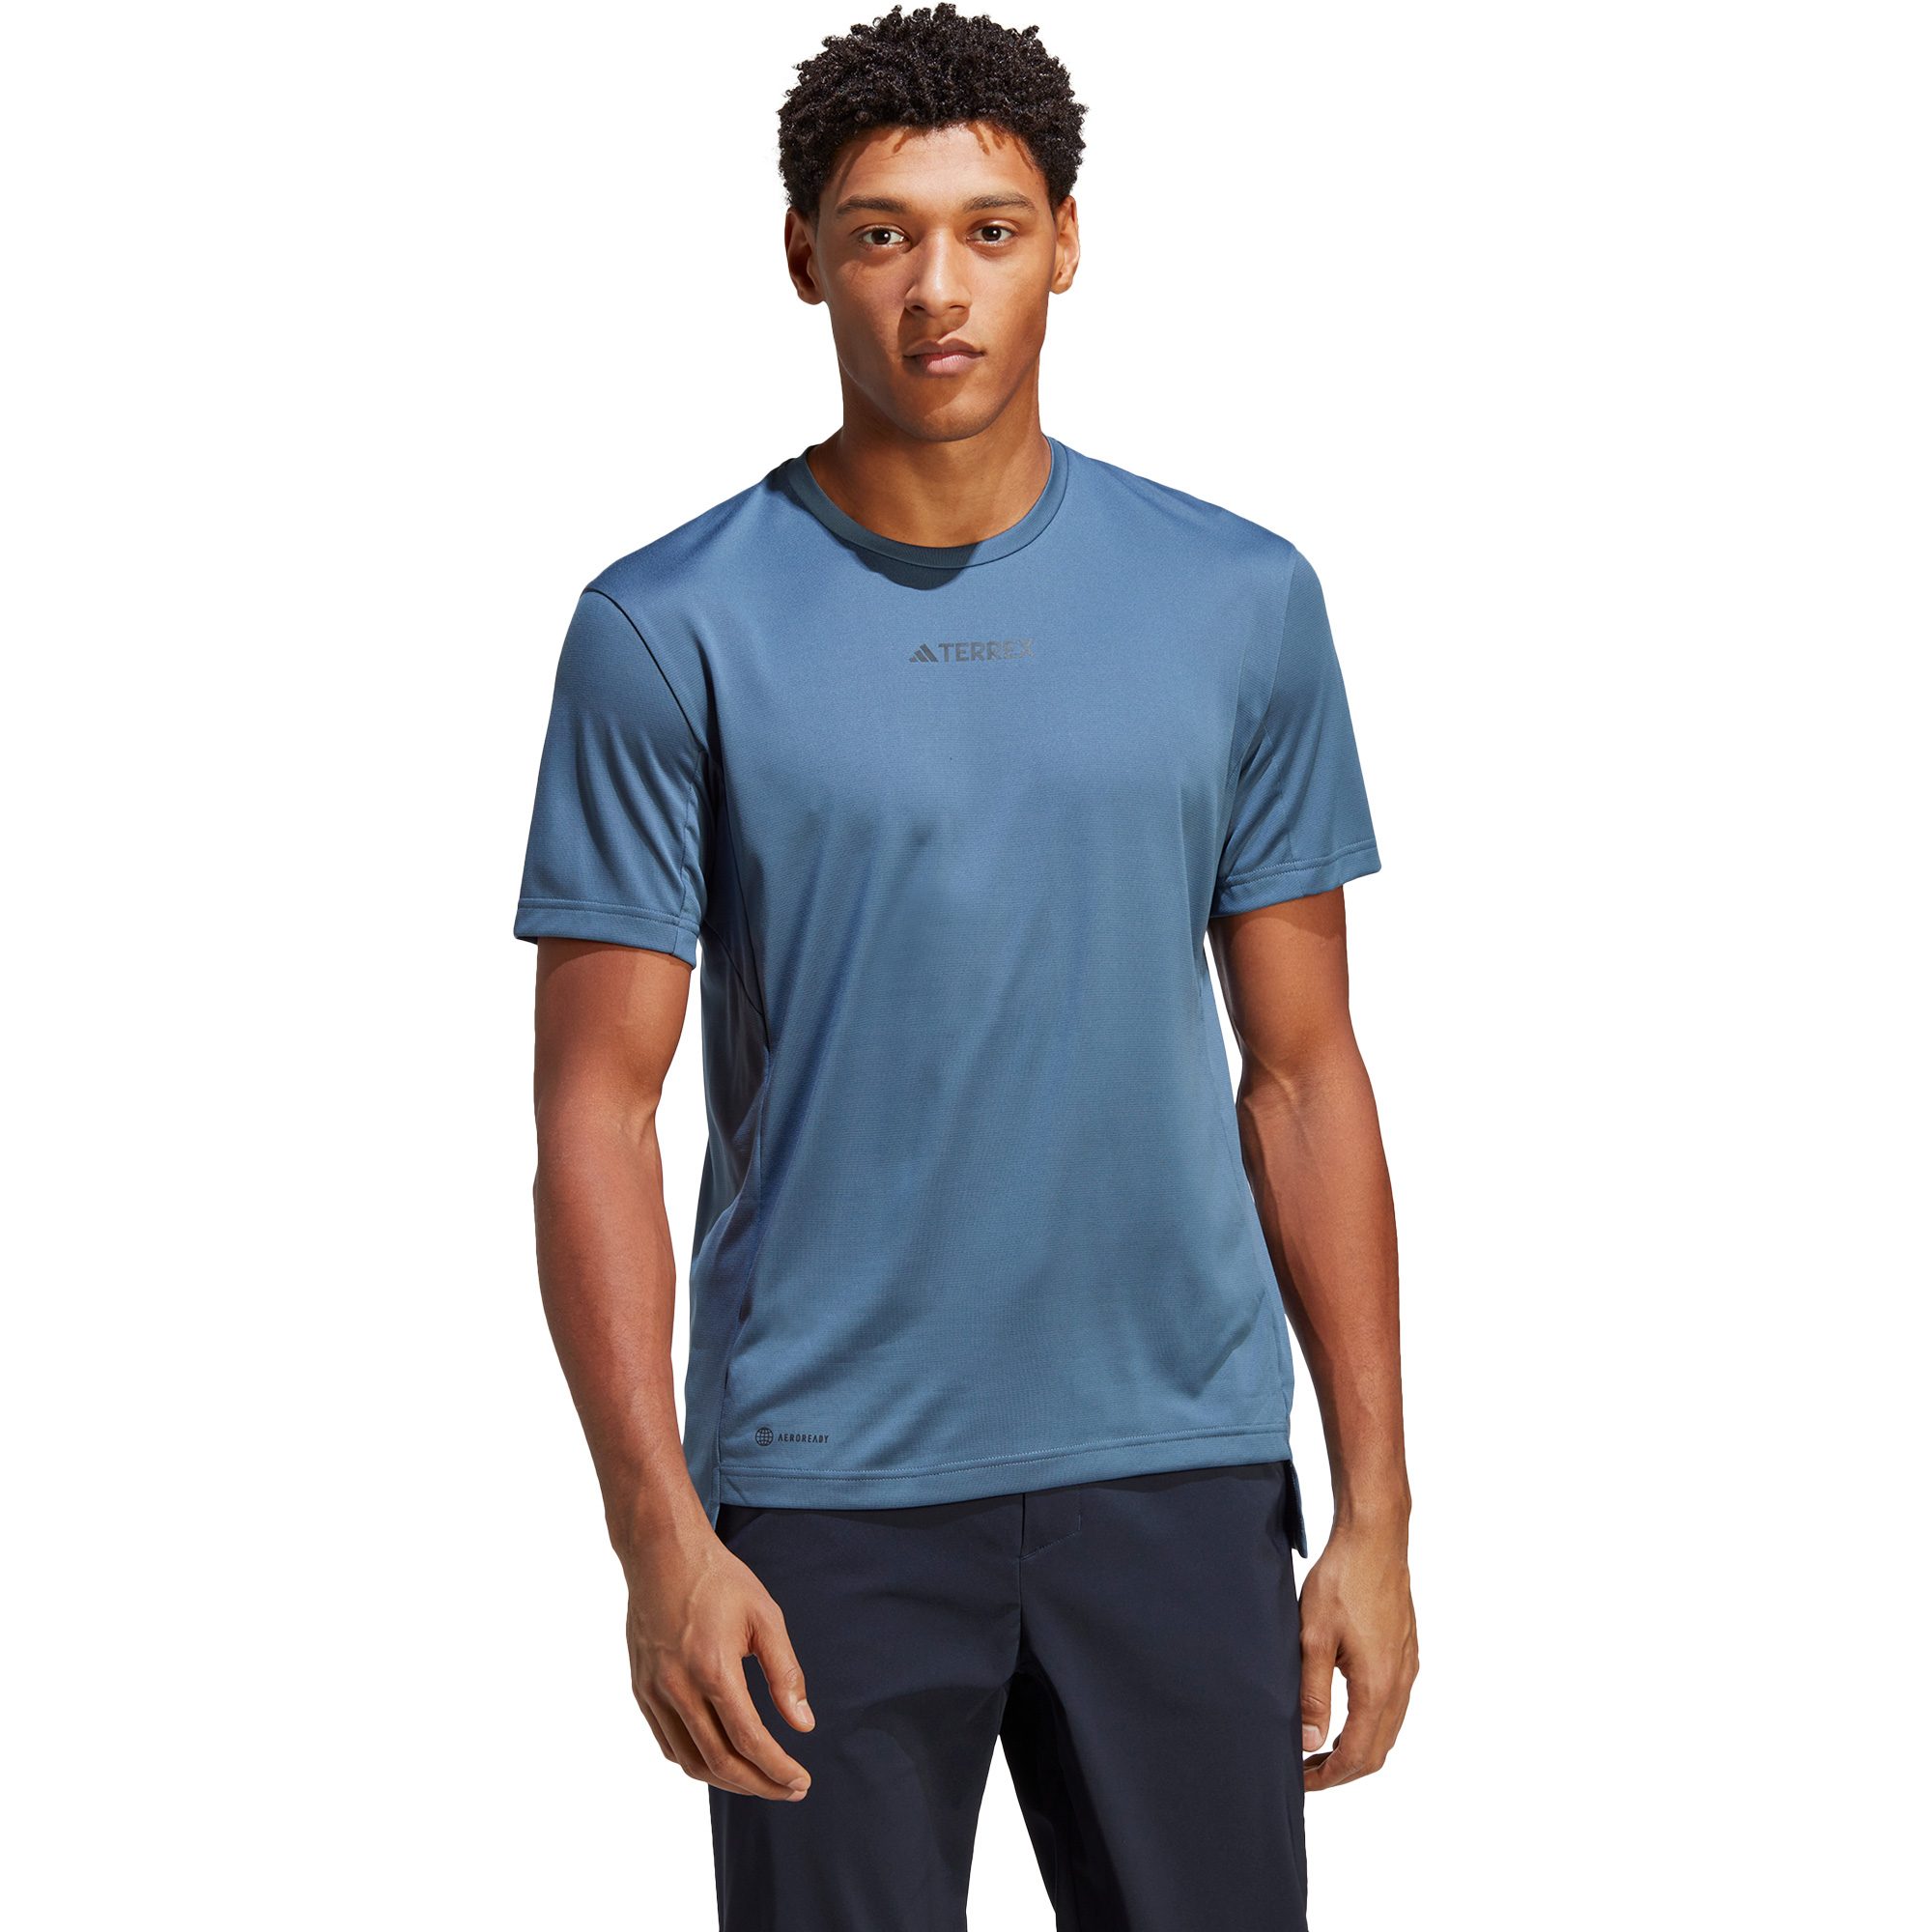 Terrex wonder Shop steel - at TERREX adidas Multi Sport Bittl Men T-Shirt